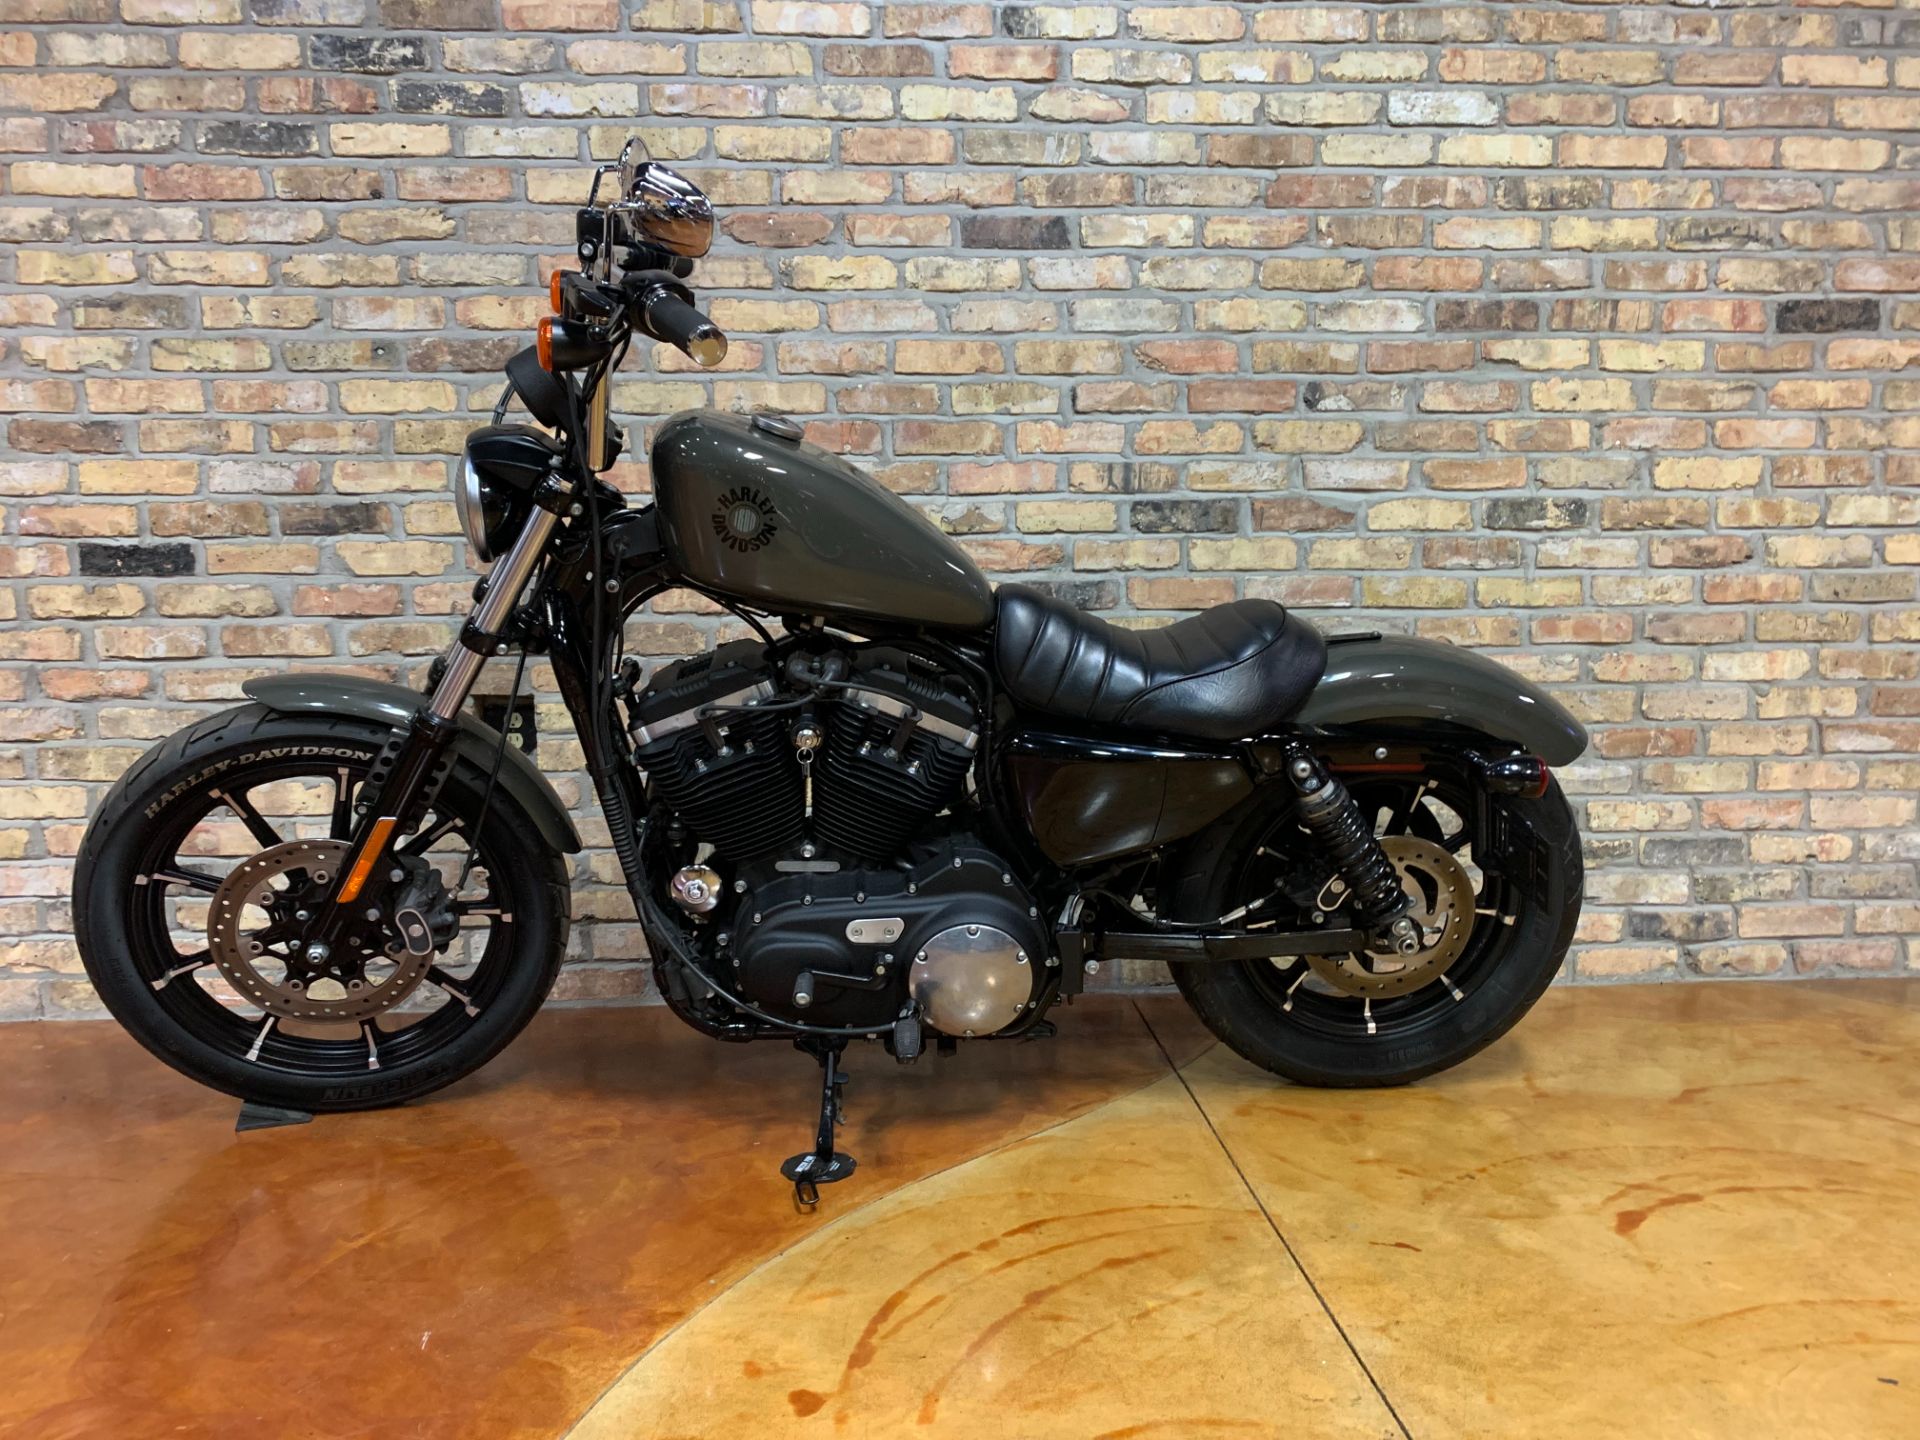 2019 Harley-Davidson Iron 883™ in Big Bend, Wisconsin - Photo 18